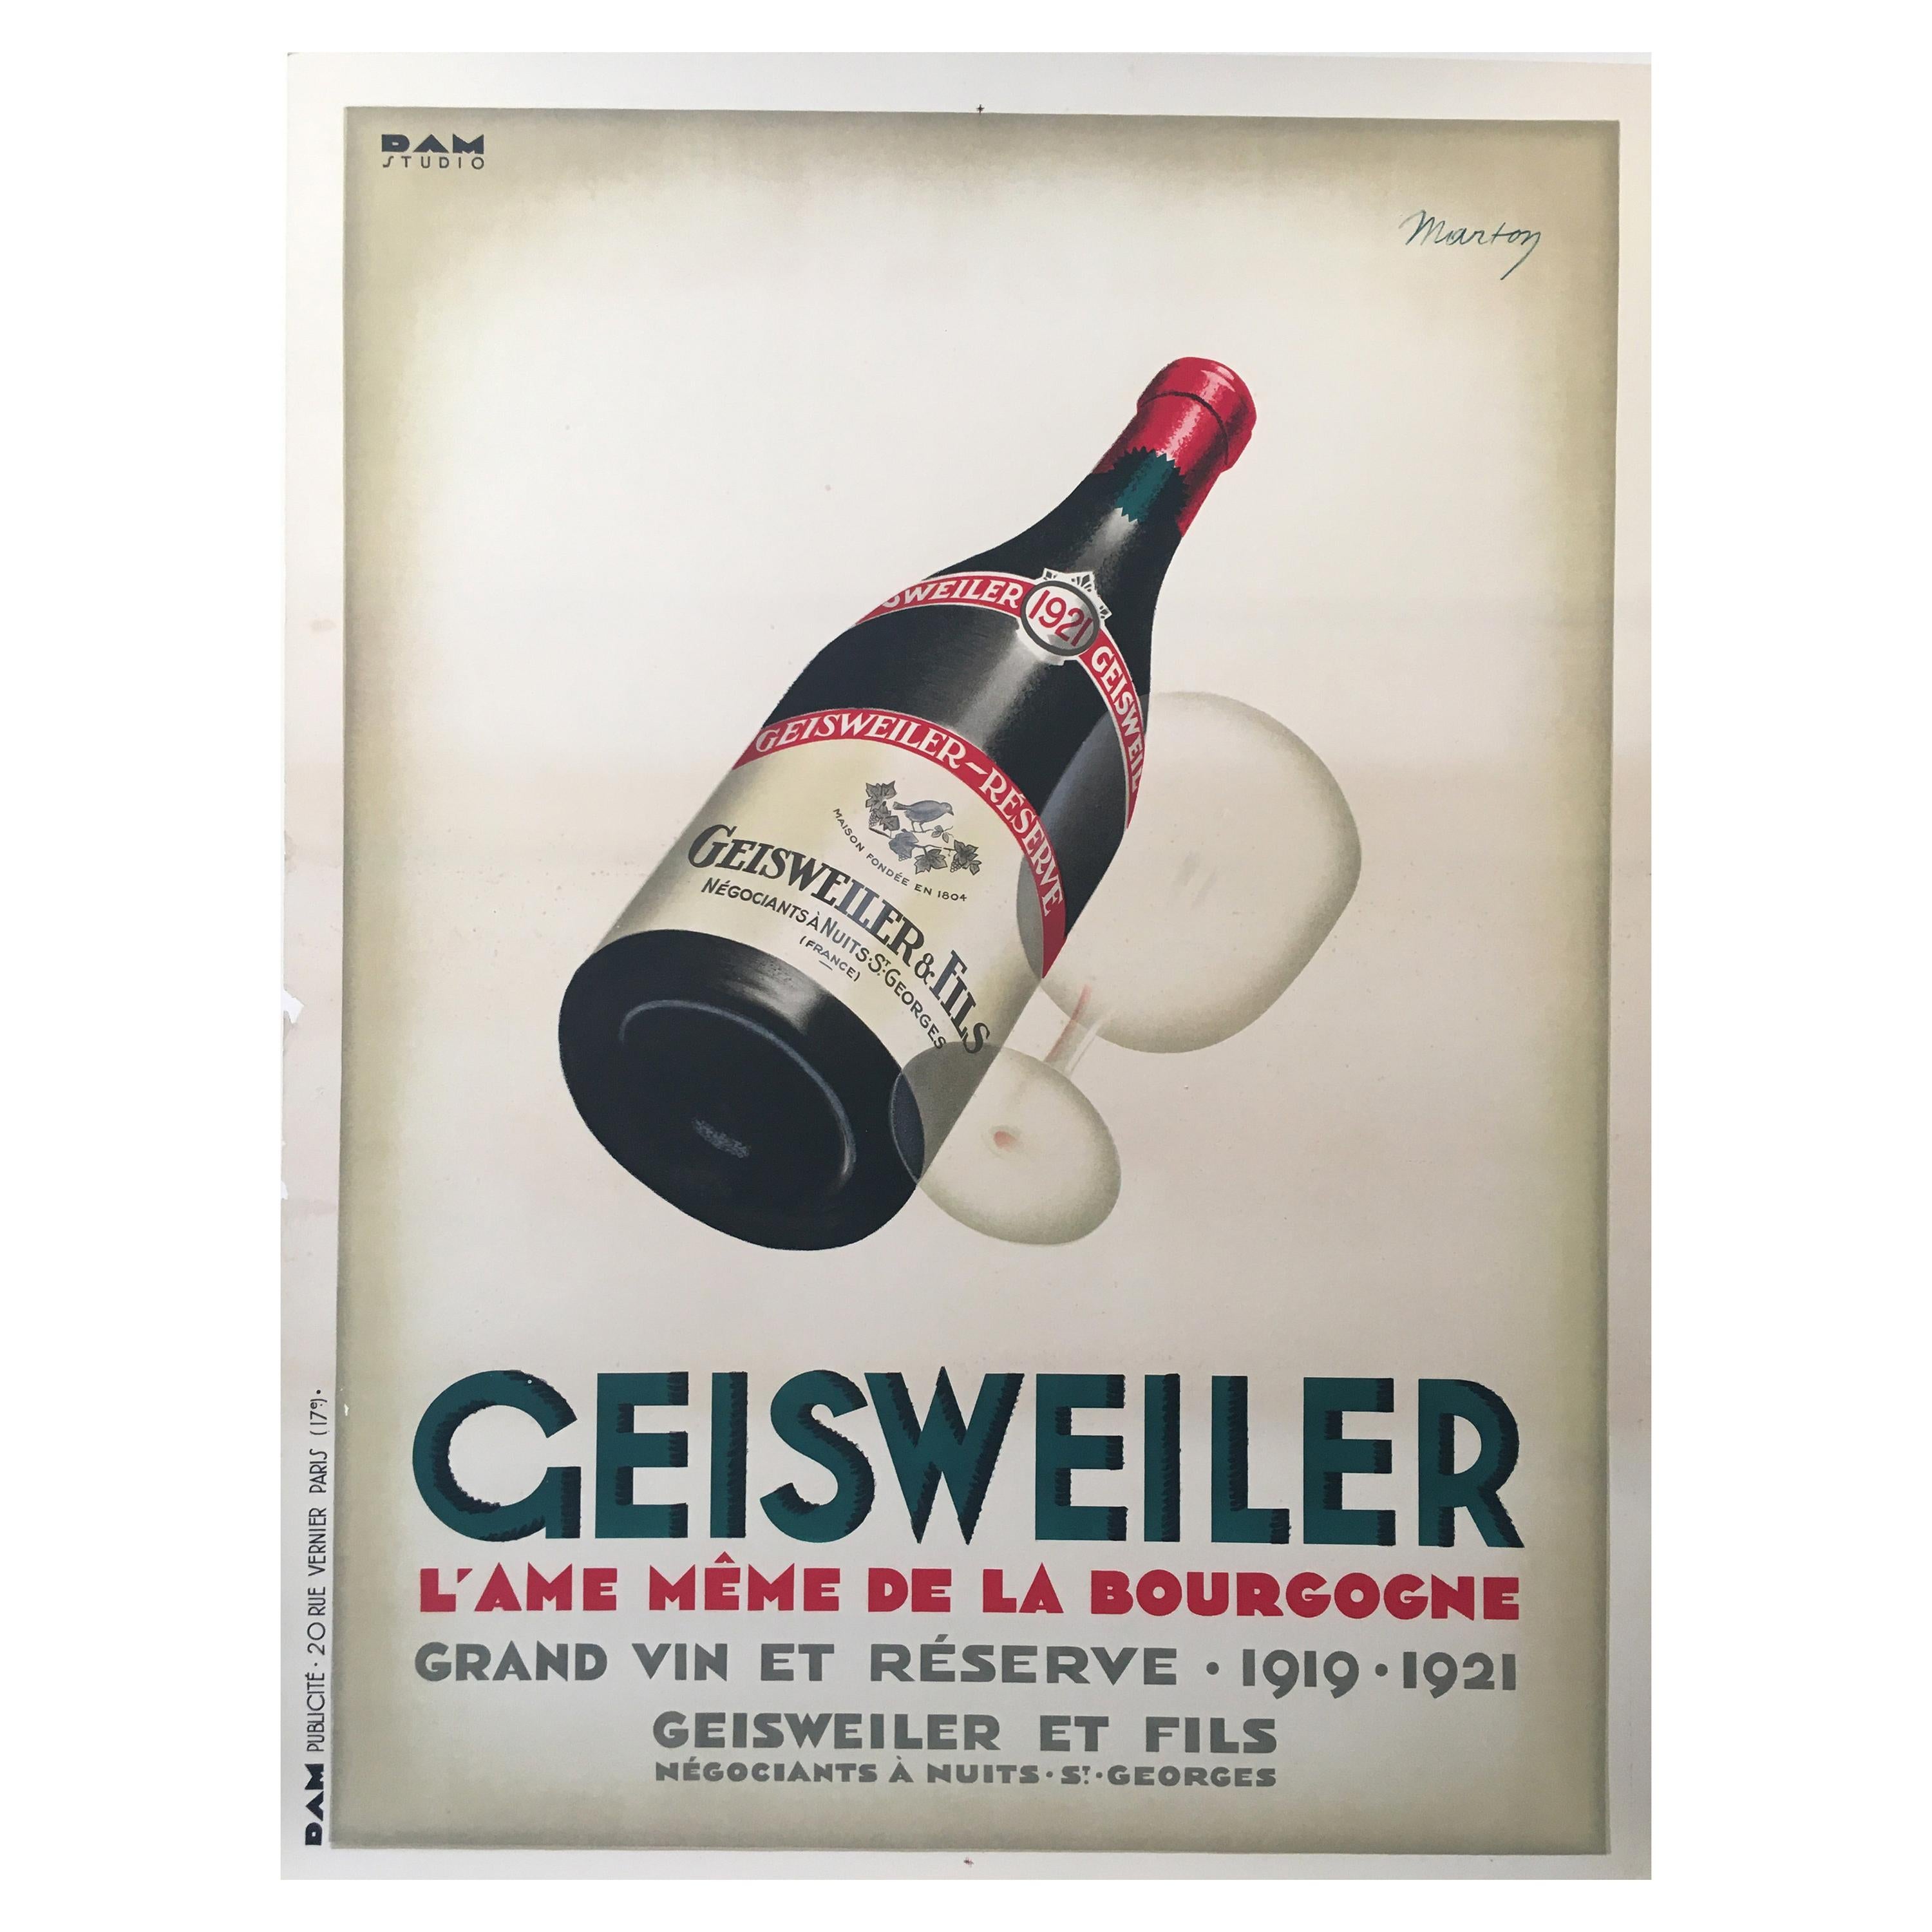 'Original Vintage Art Deco Poster, 'Geisweiler' by Marton, 1921